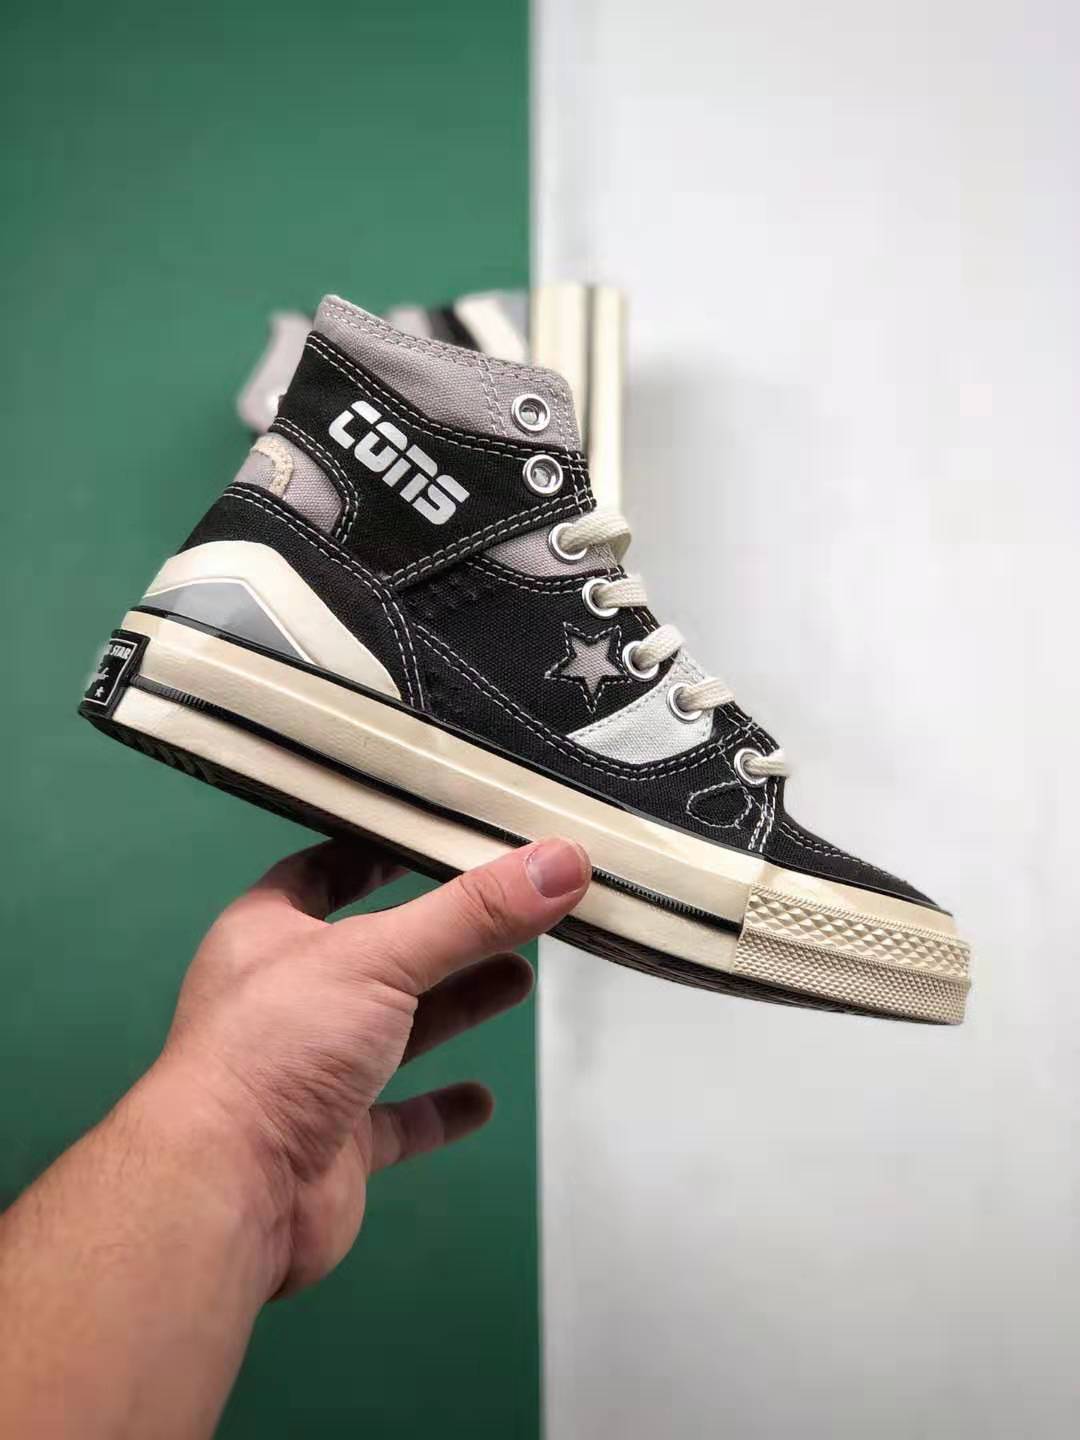 Converse Chuck 1970s E260 Hi 166462C - Classic Style for Trendy Sneaker Fans